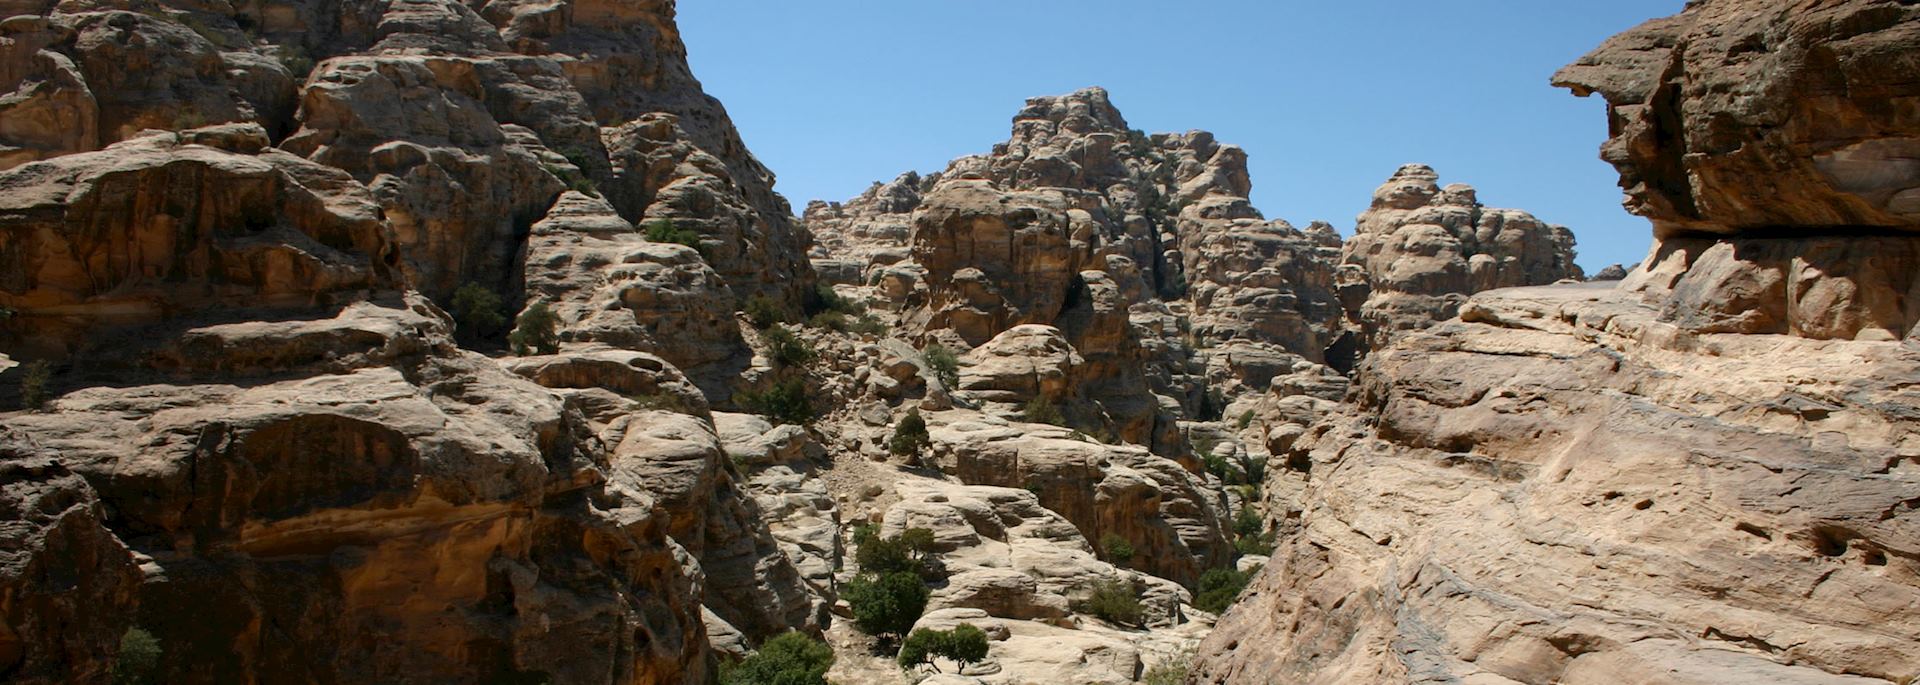 Valley near Little Petra, Jordan